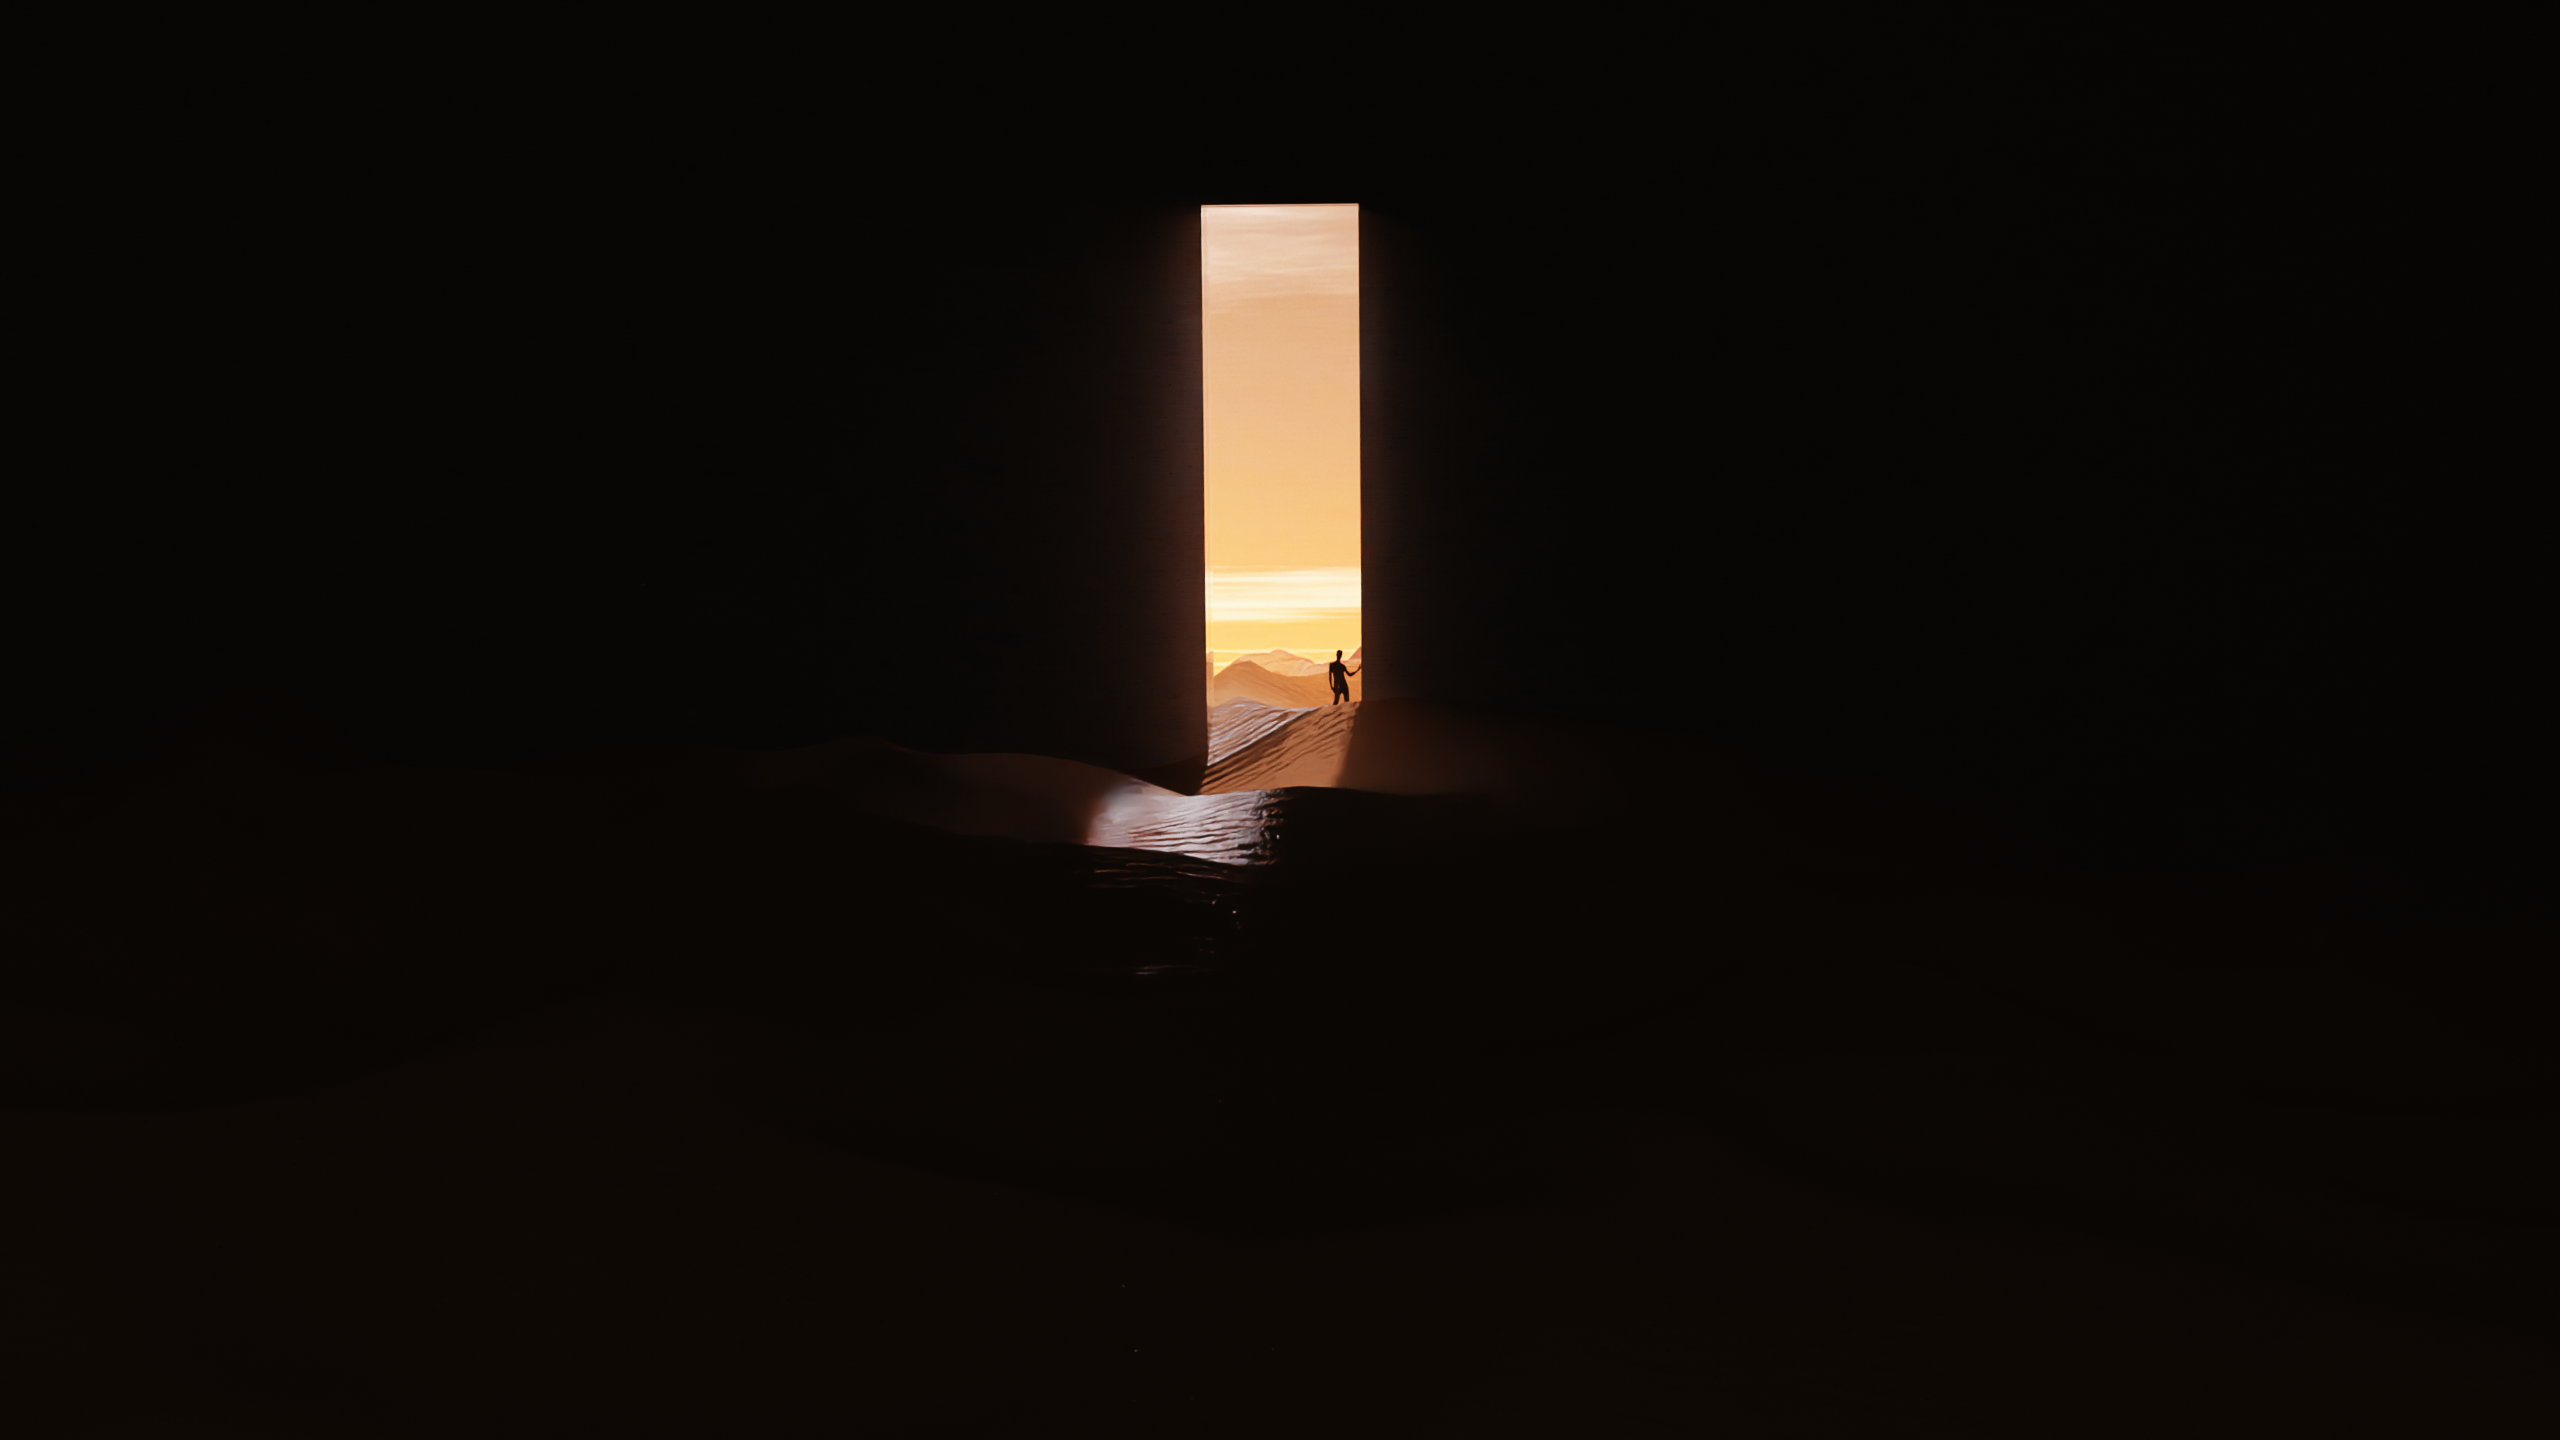 General 2560x1440 landscape science fiction dunes sunlight shadow digital art simple background low light